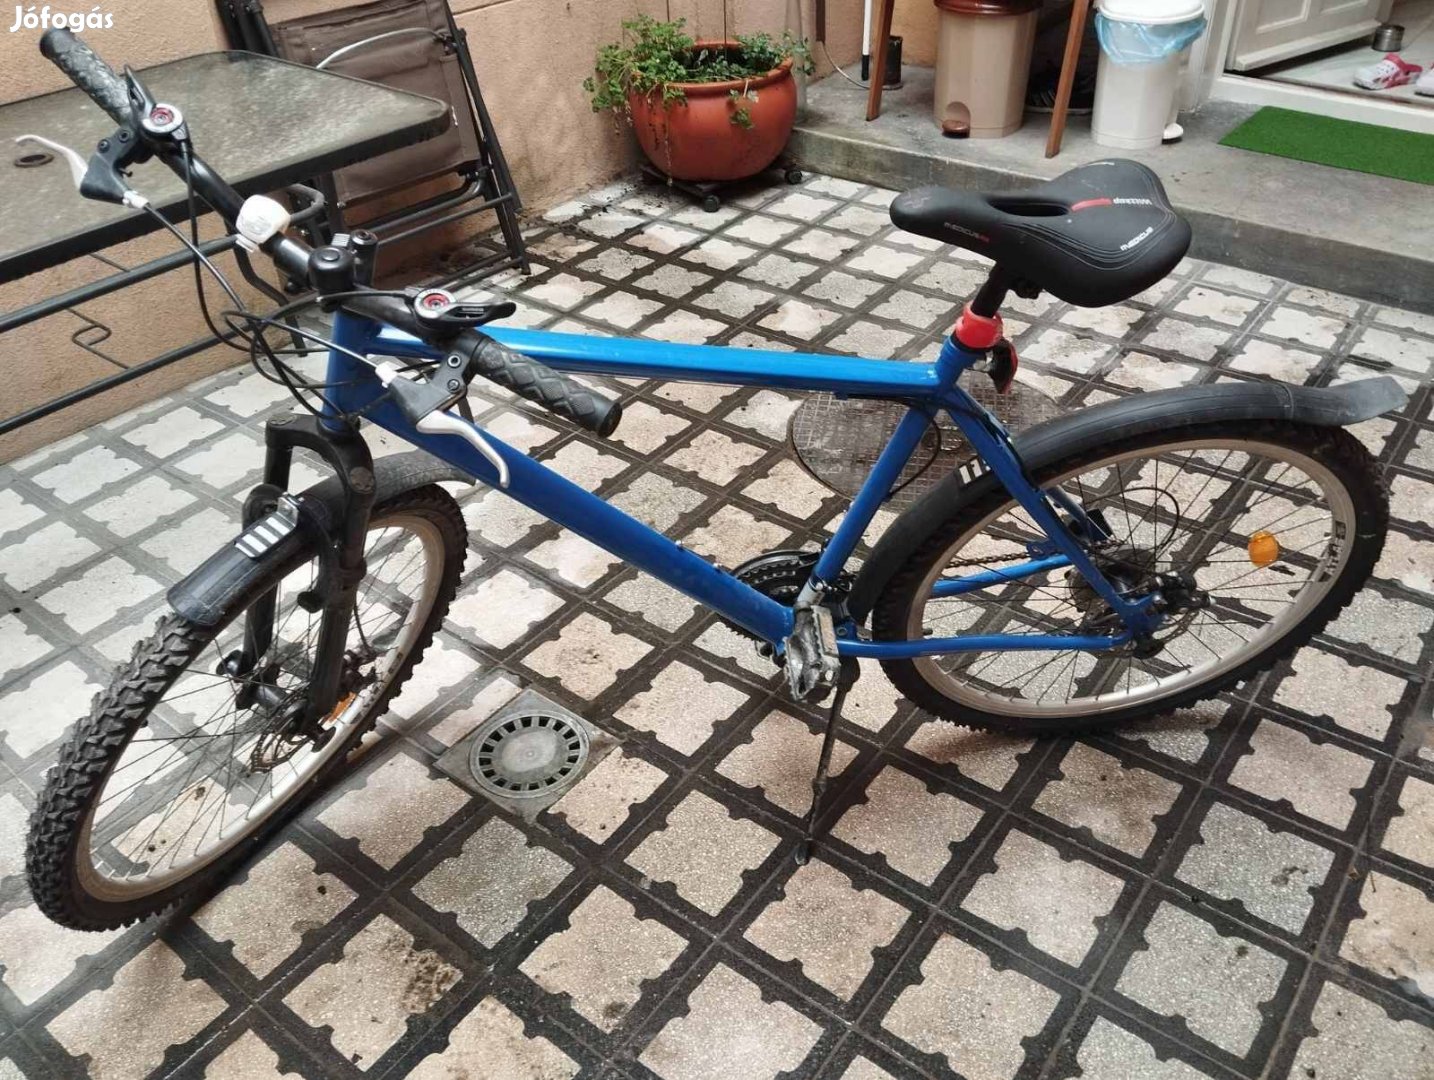 Eladó mountain bike bicikli 40000 forintért